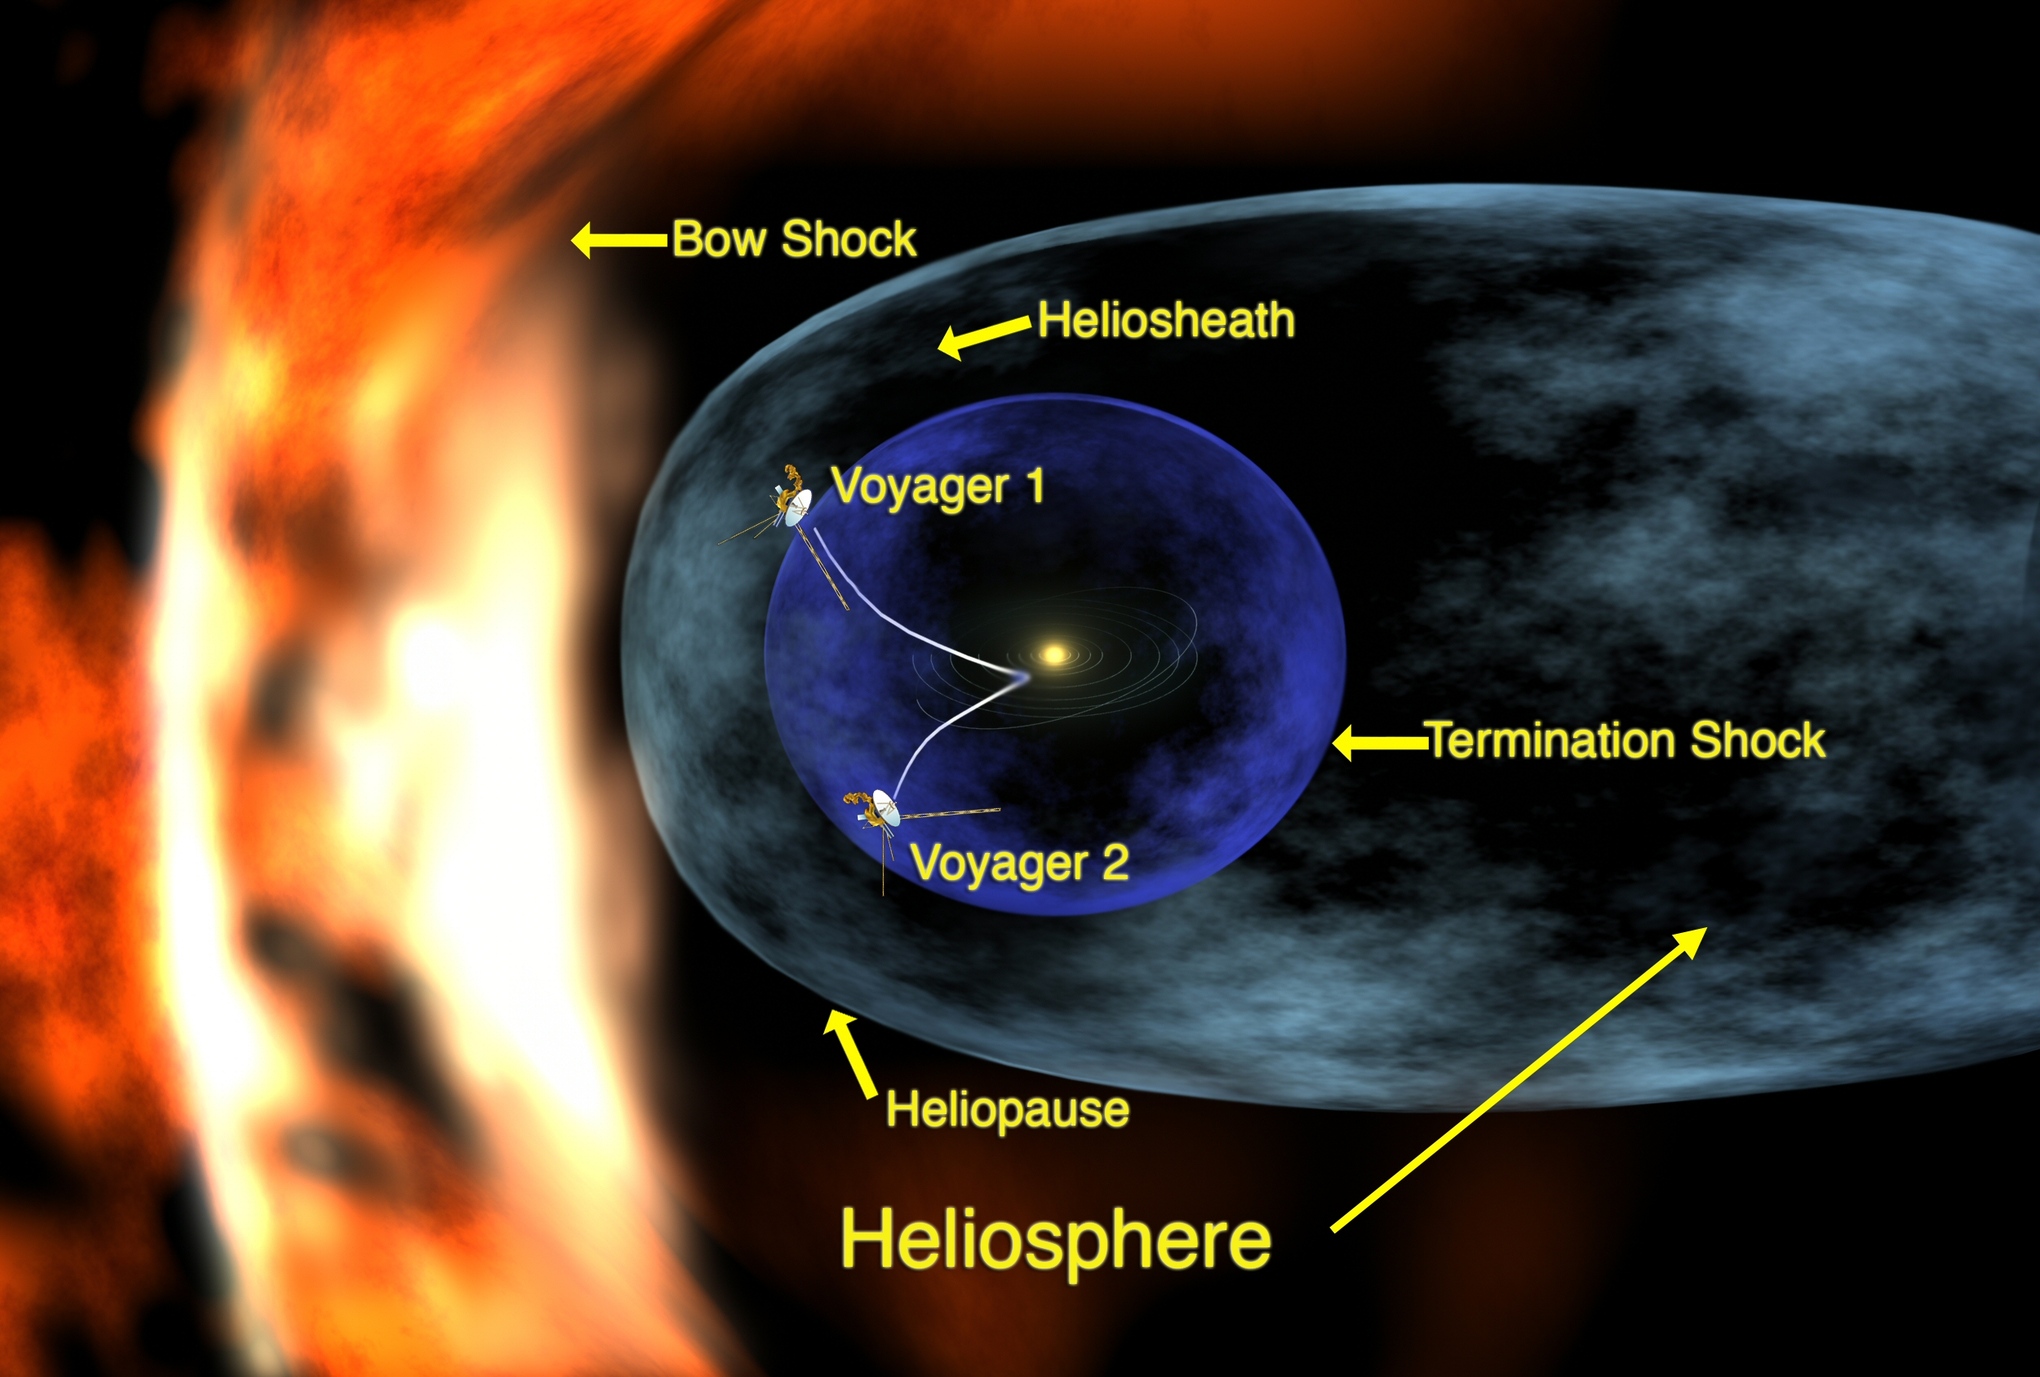 Voyager_1_entering_heliosheath_region